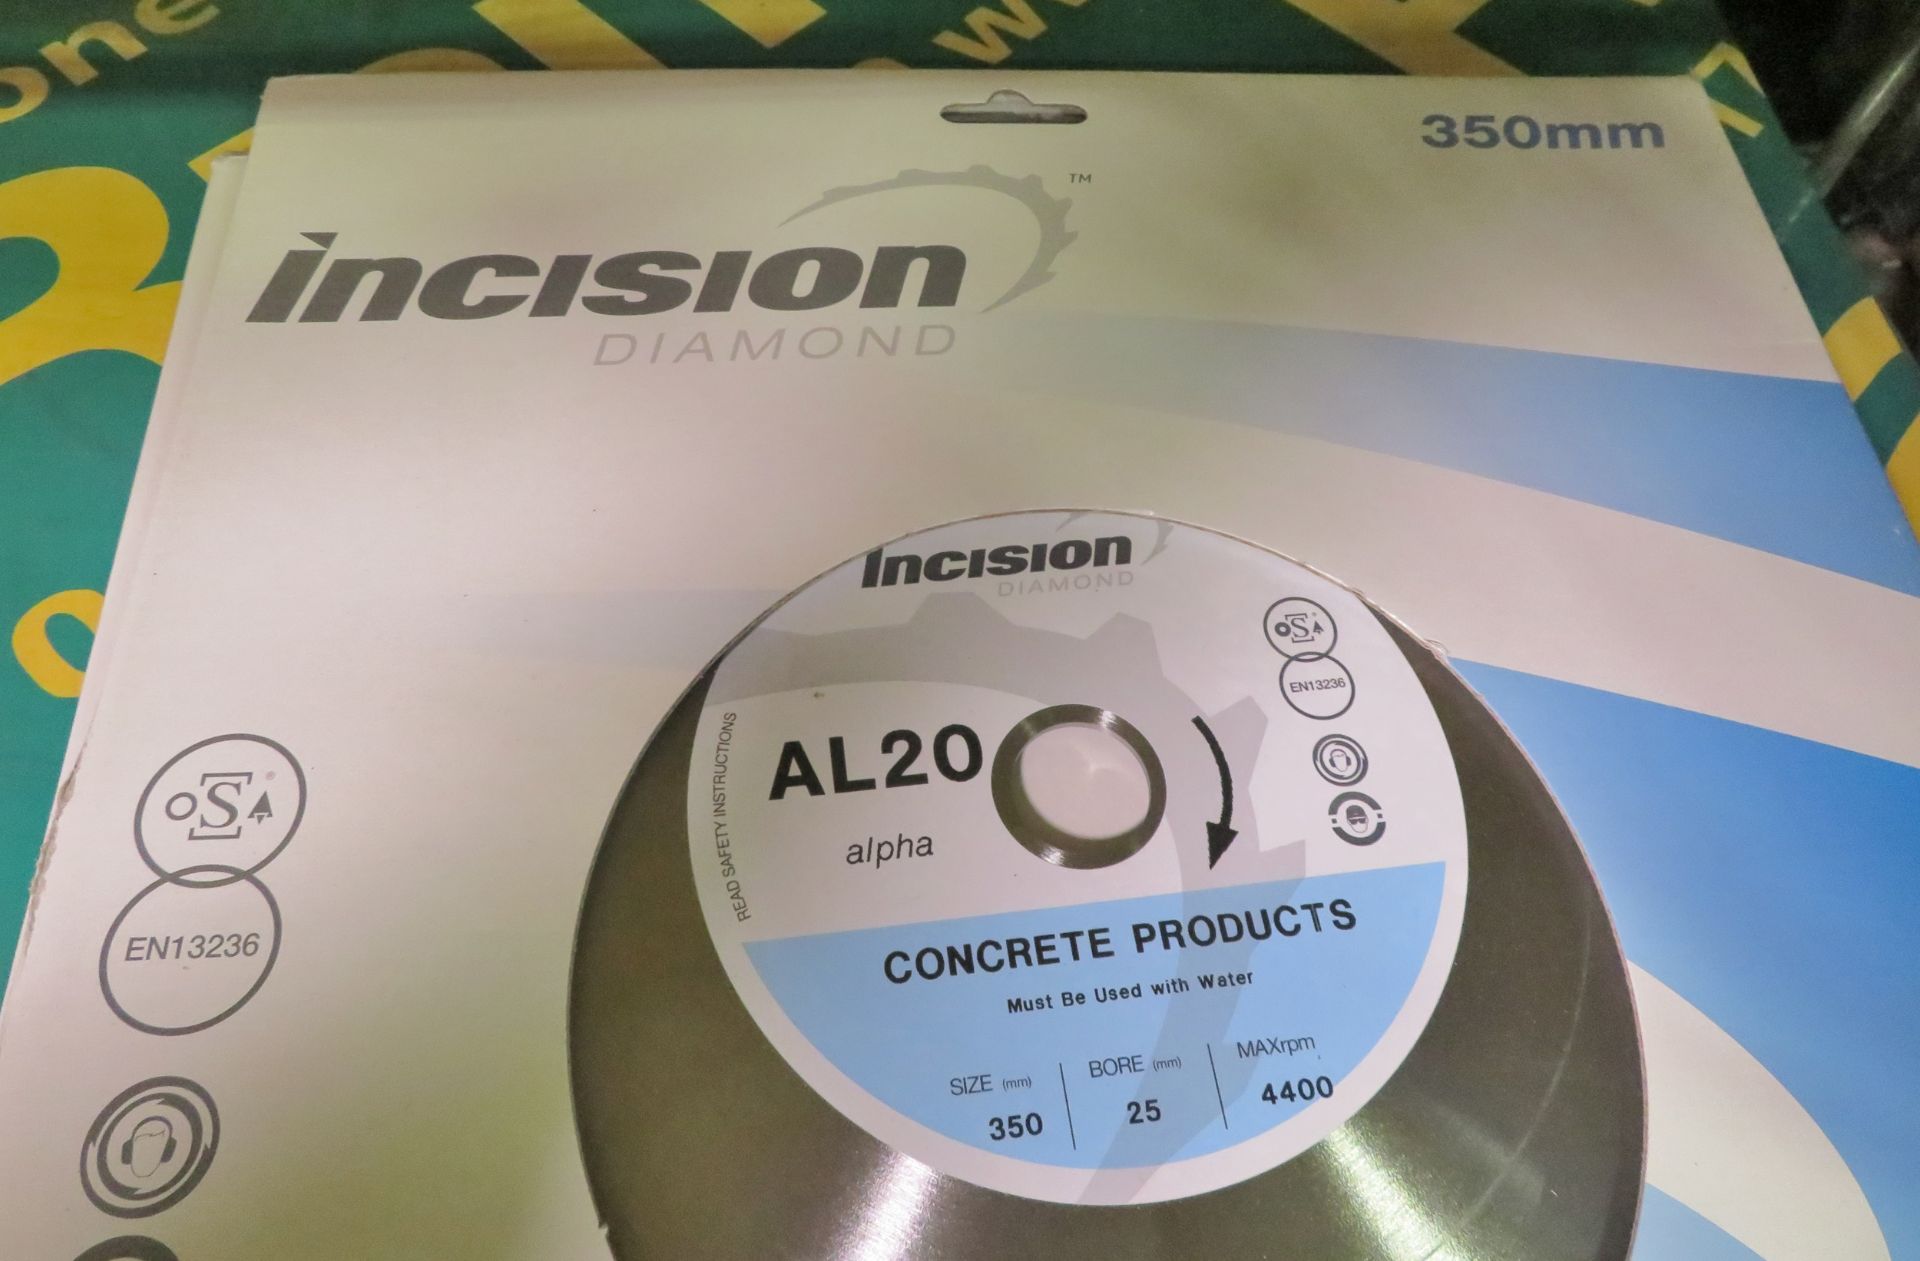 3x Incision AL20 Professional Diamond Blades Cut Concrete 350mm - Image 2 of 3